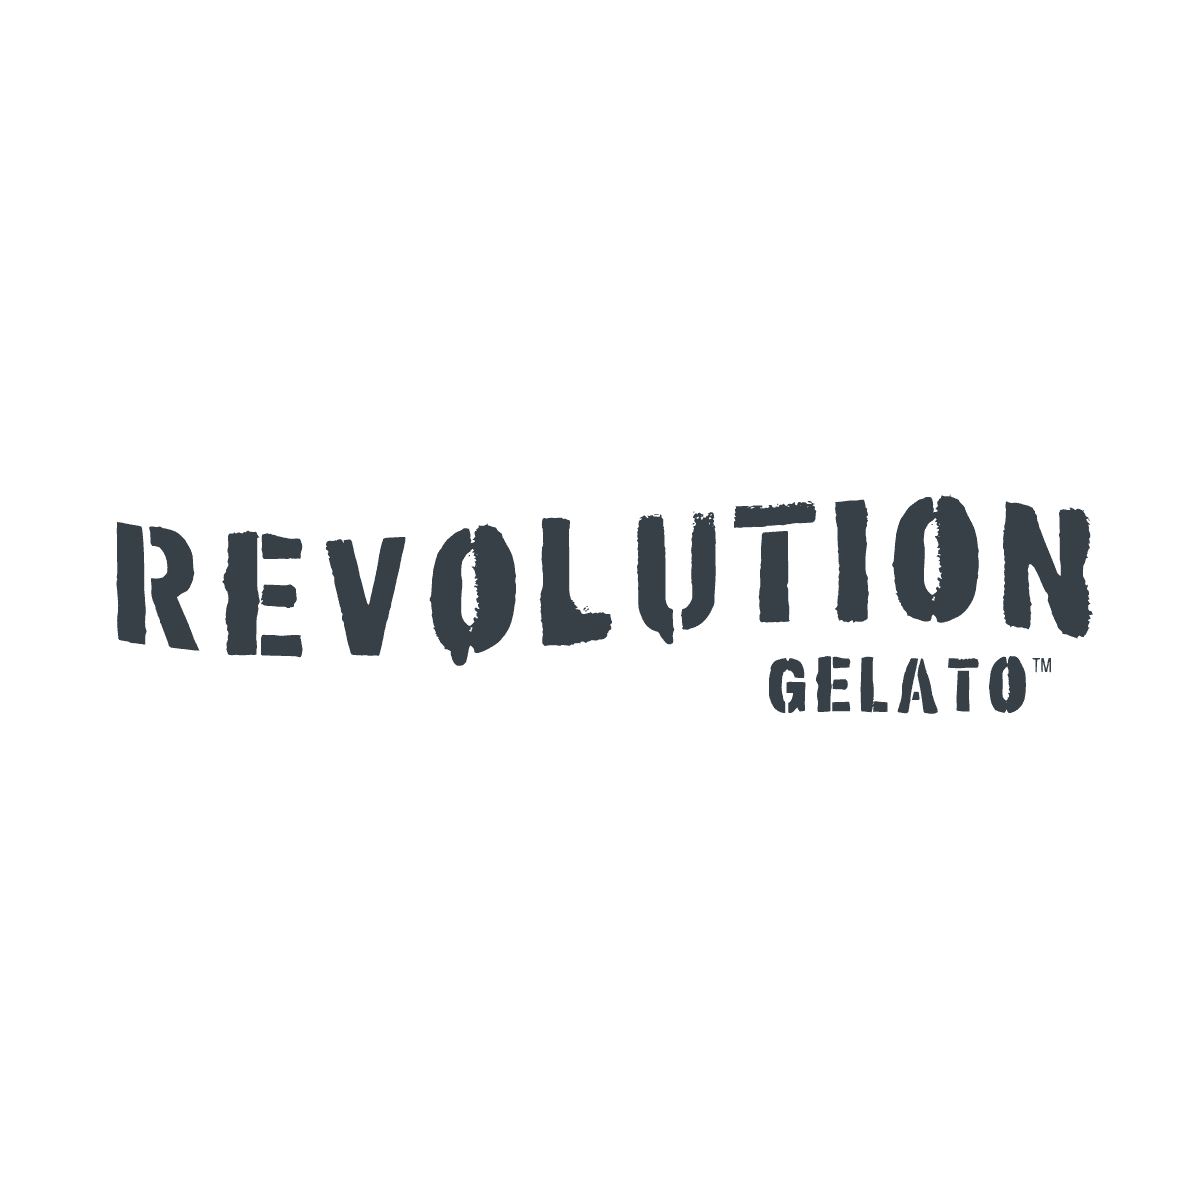 Revolution Gelato logo